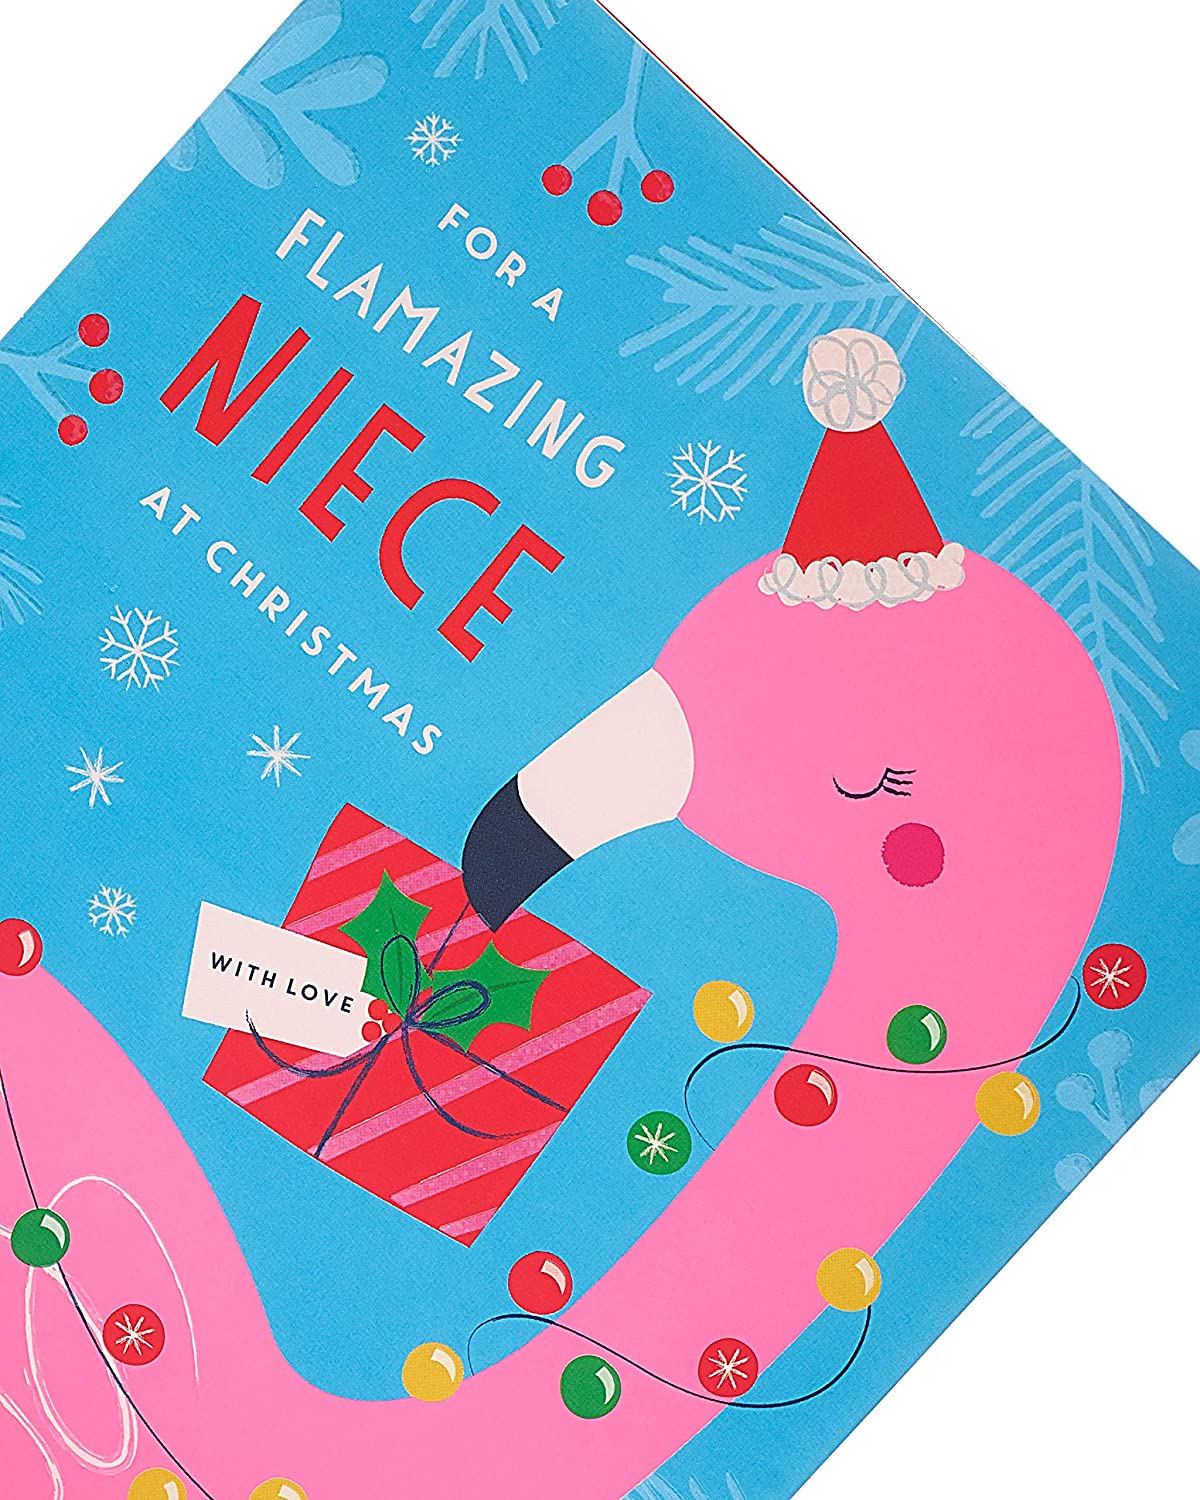 Niece Christmas Card Fun Flamingo Design 